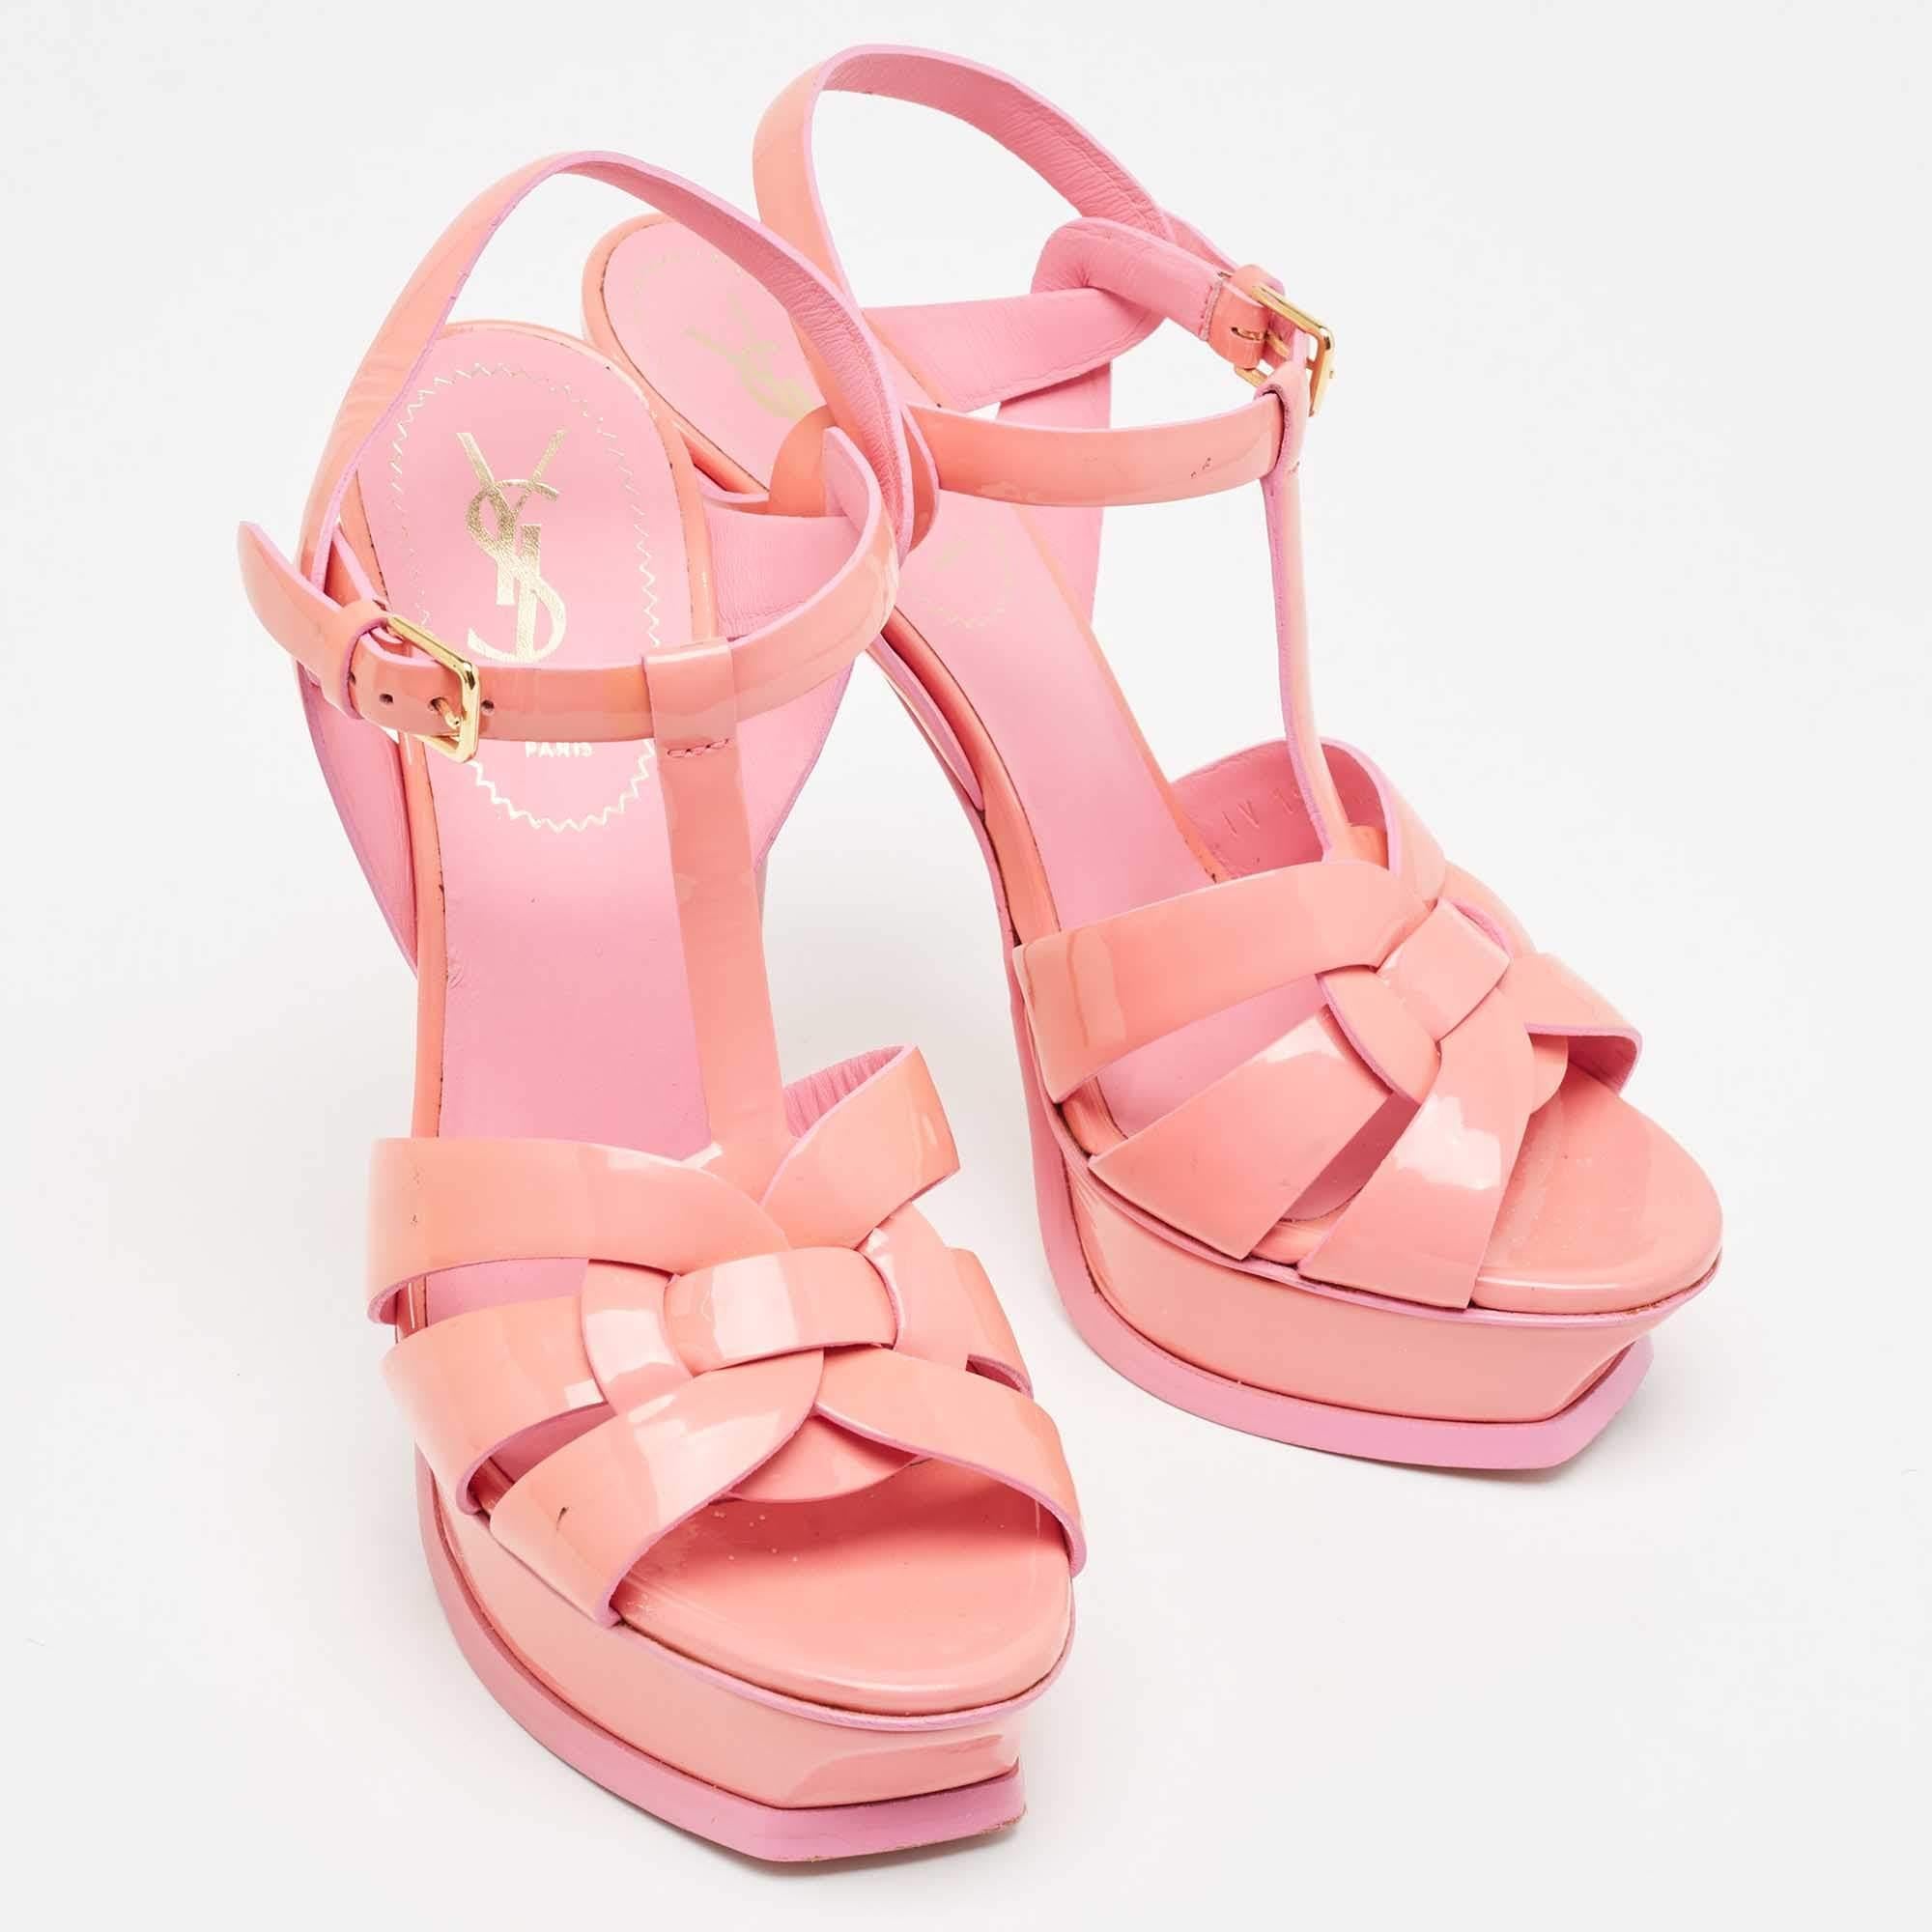 Yves Saint Laurent Pink Patent Tribute Sandals Size 37 For Sale 4